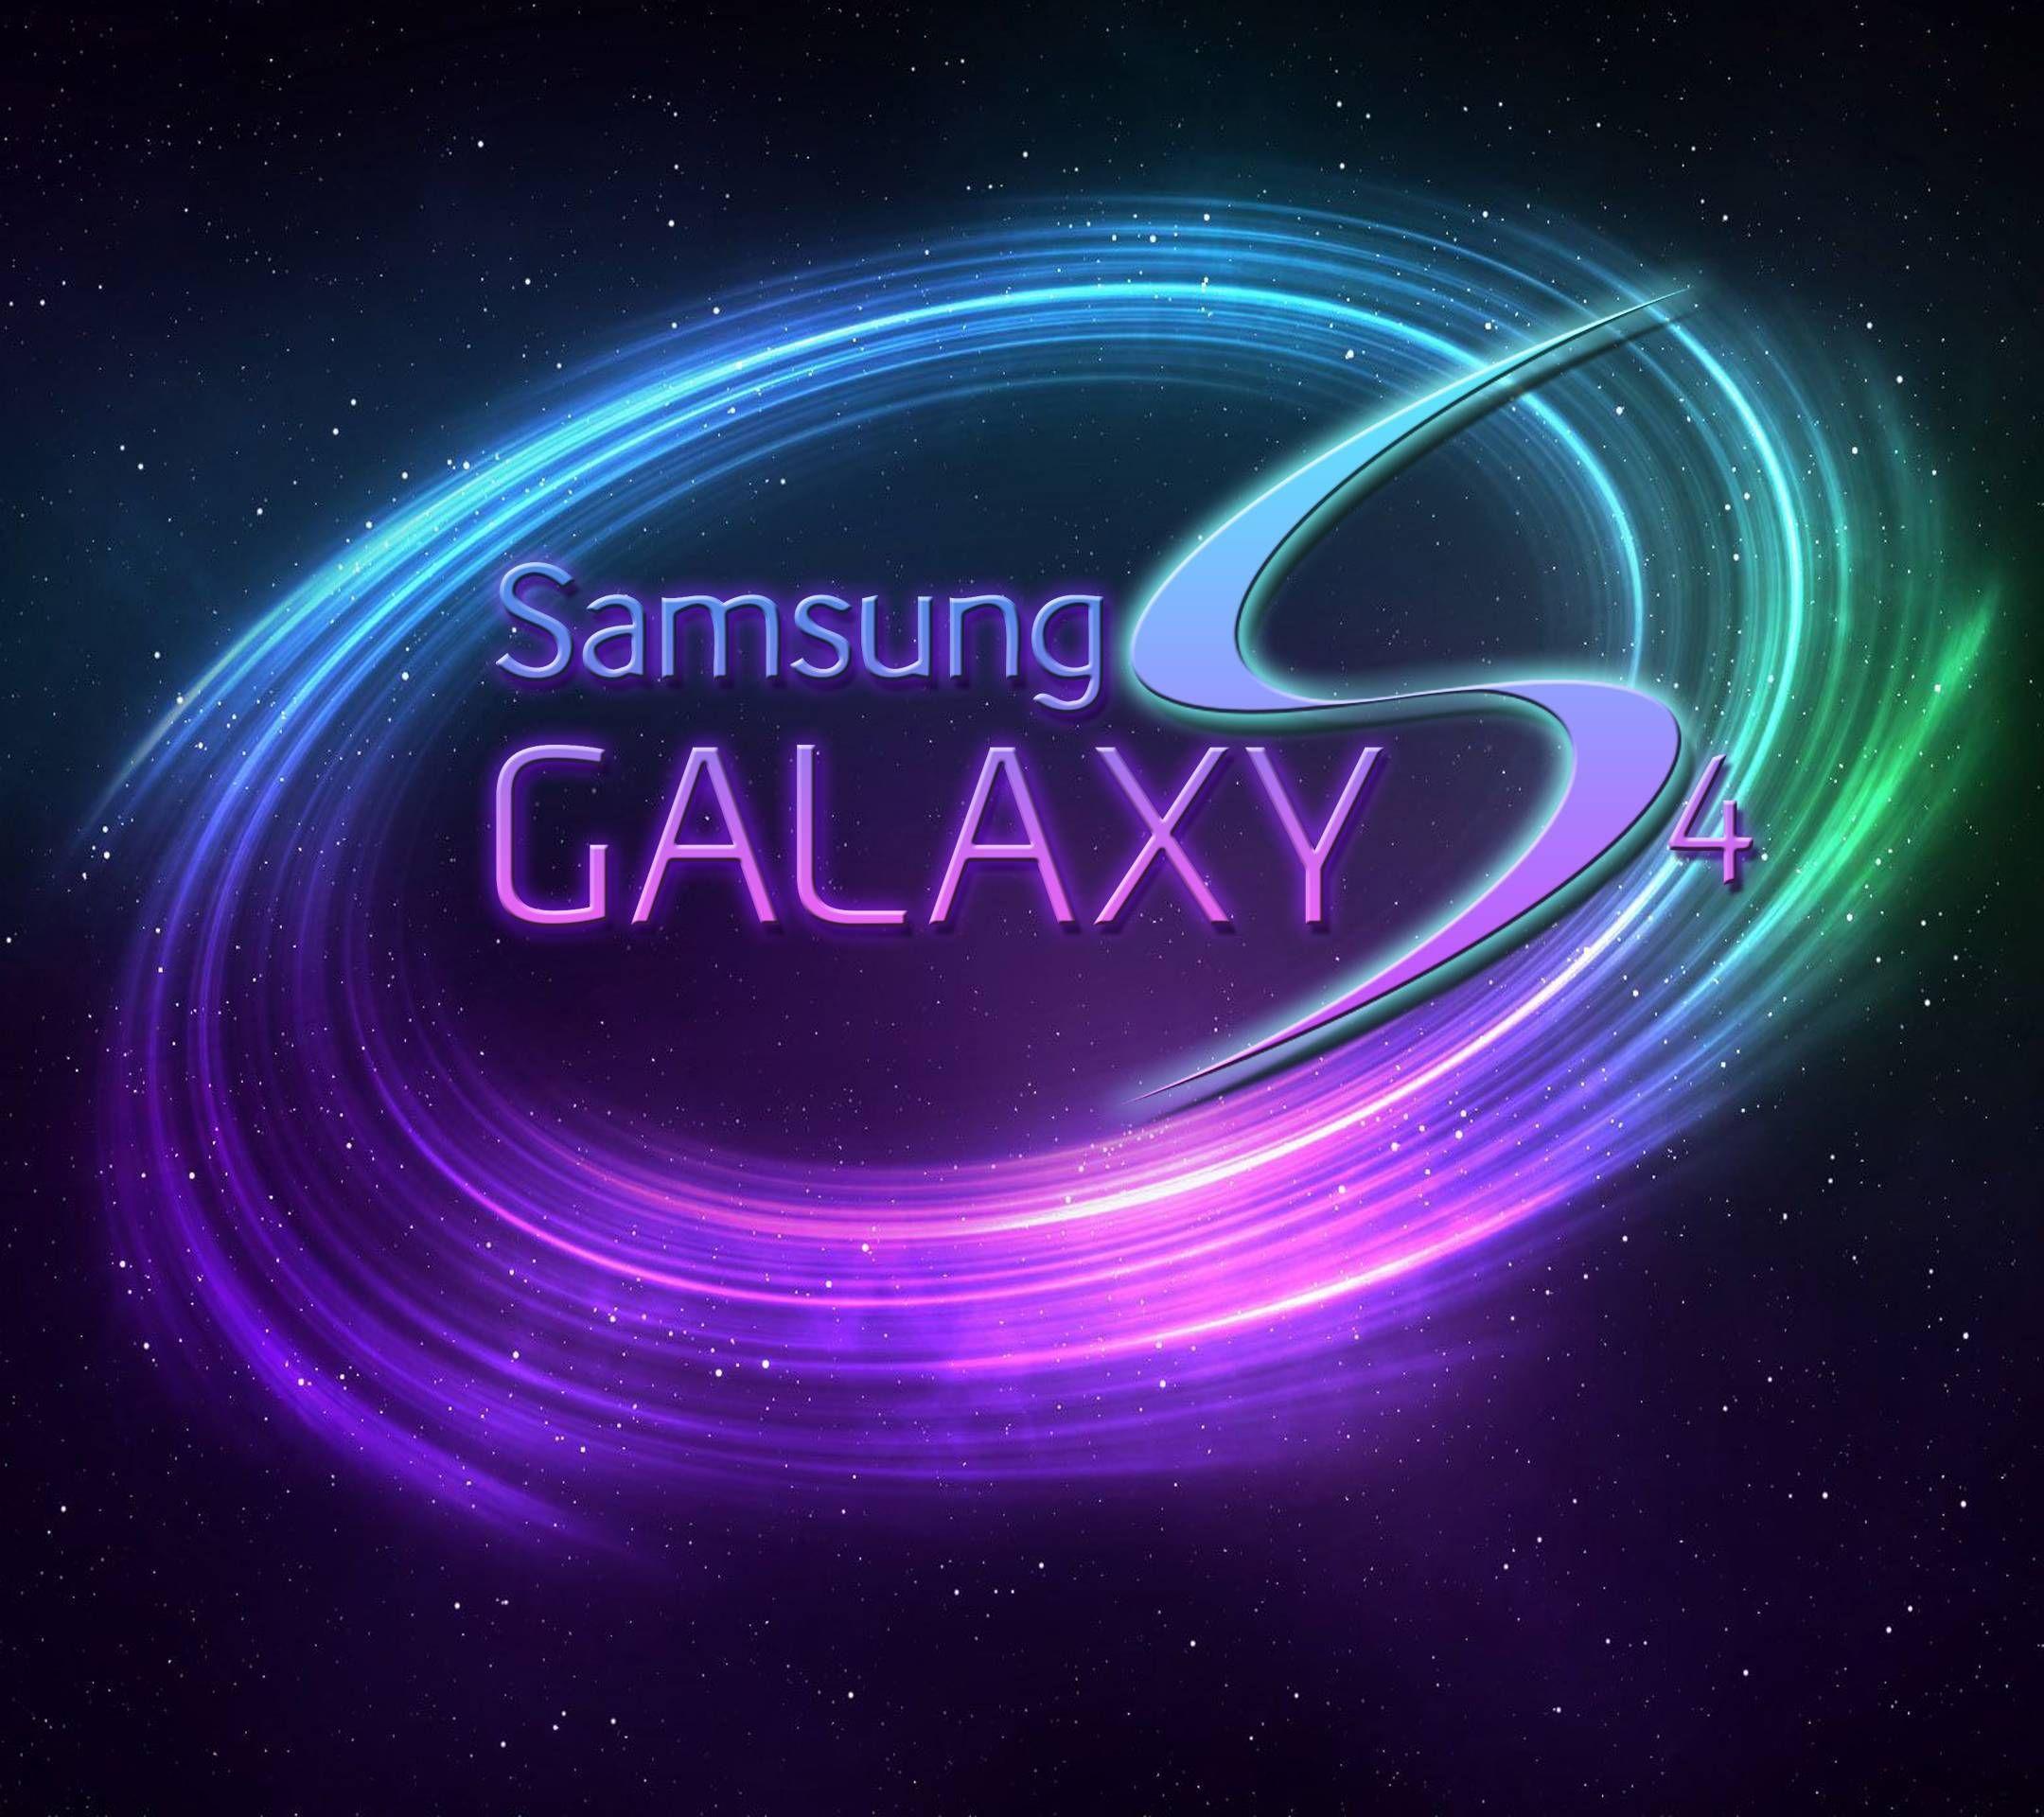 Samsung Galaxy Logo Wallpapers Top Free Samsung Galaxy Logo Backgrounds Wallpaperaccess